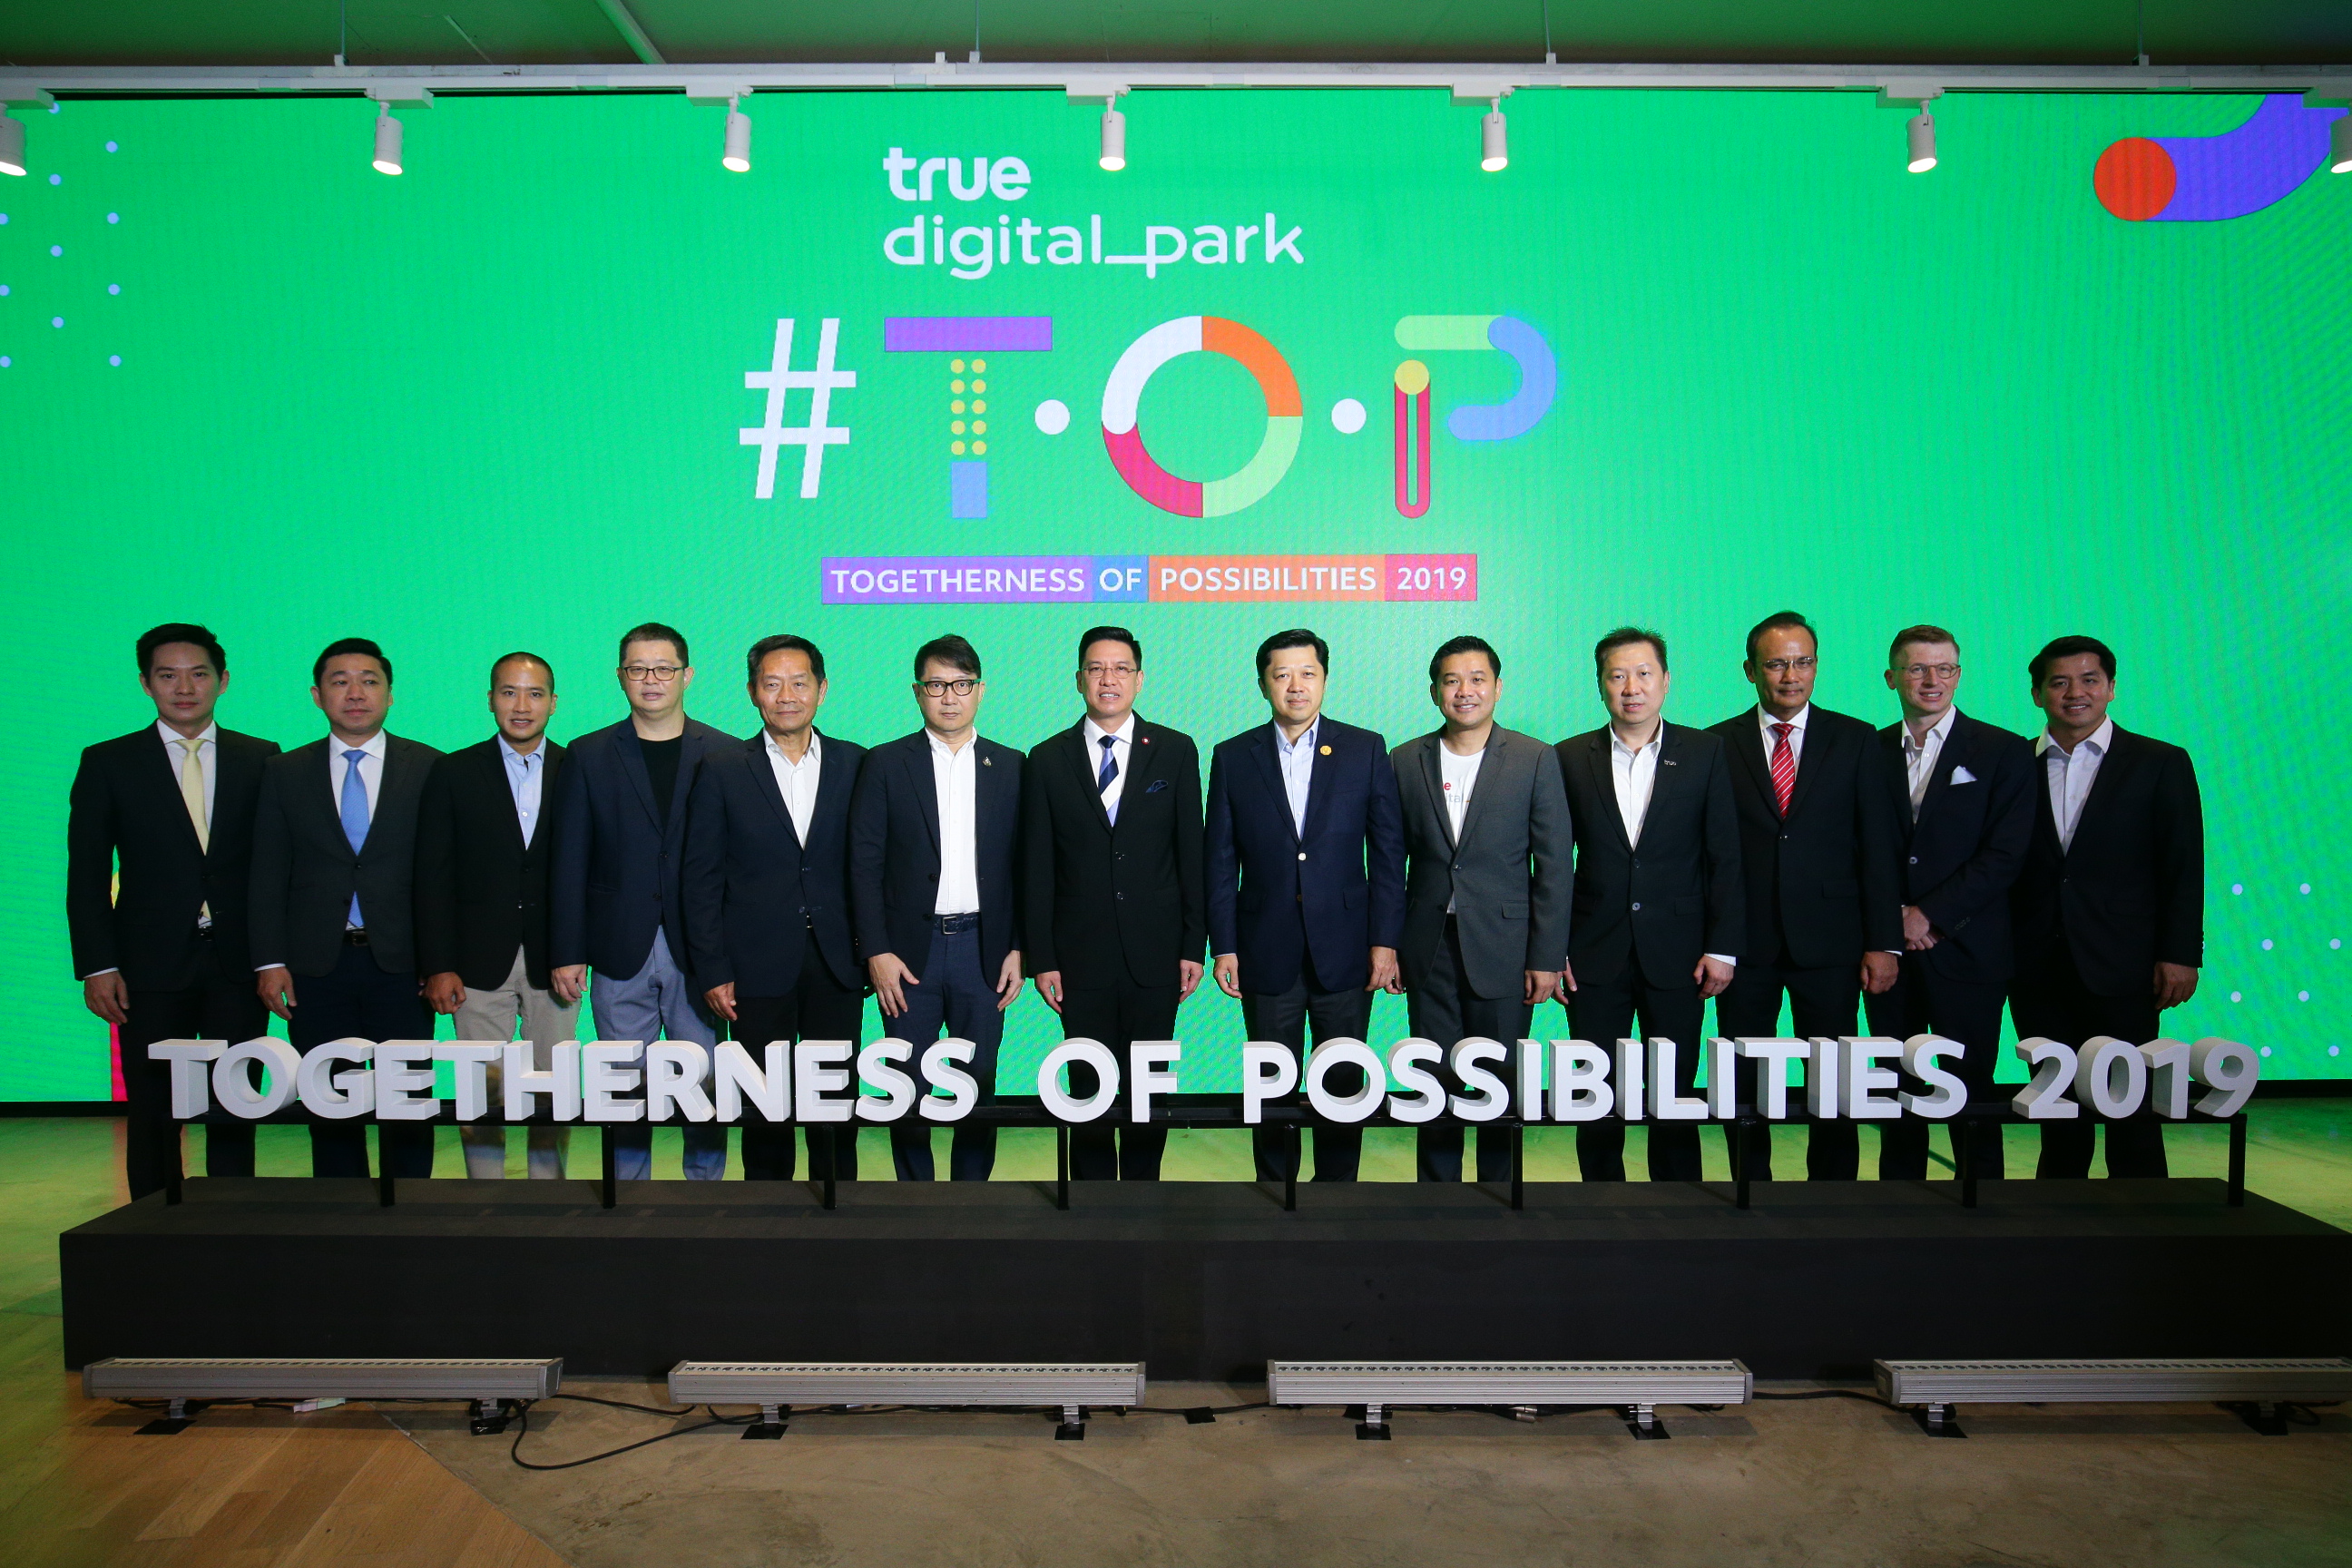 true-digital-park-togetherness-of-possibilities-2019